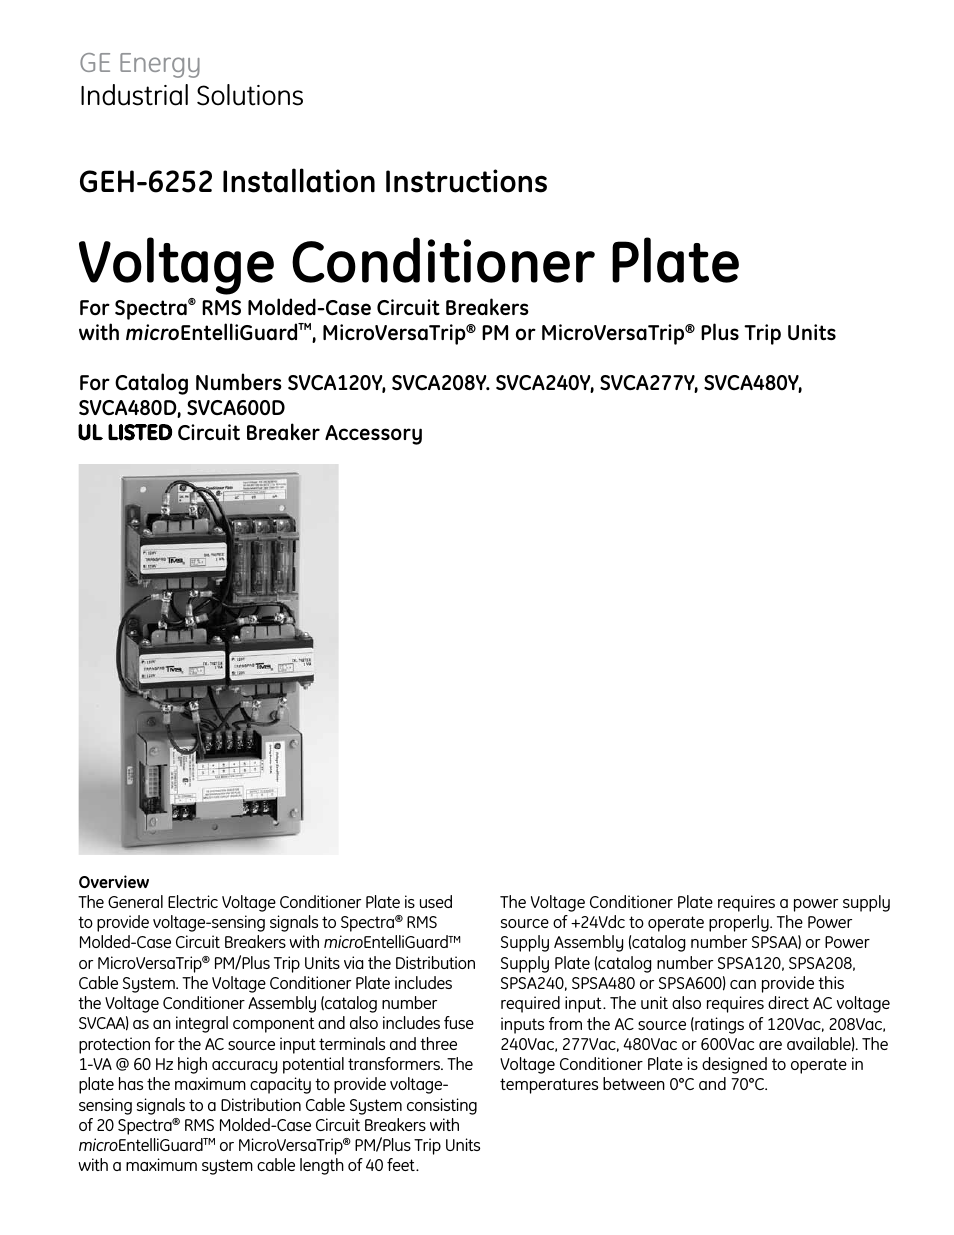 Voltage Conditioner Plate SVCA600D